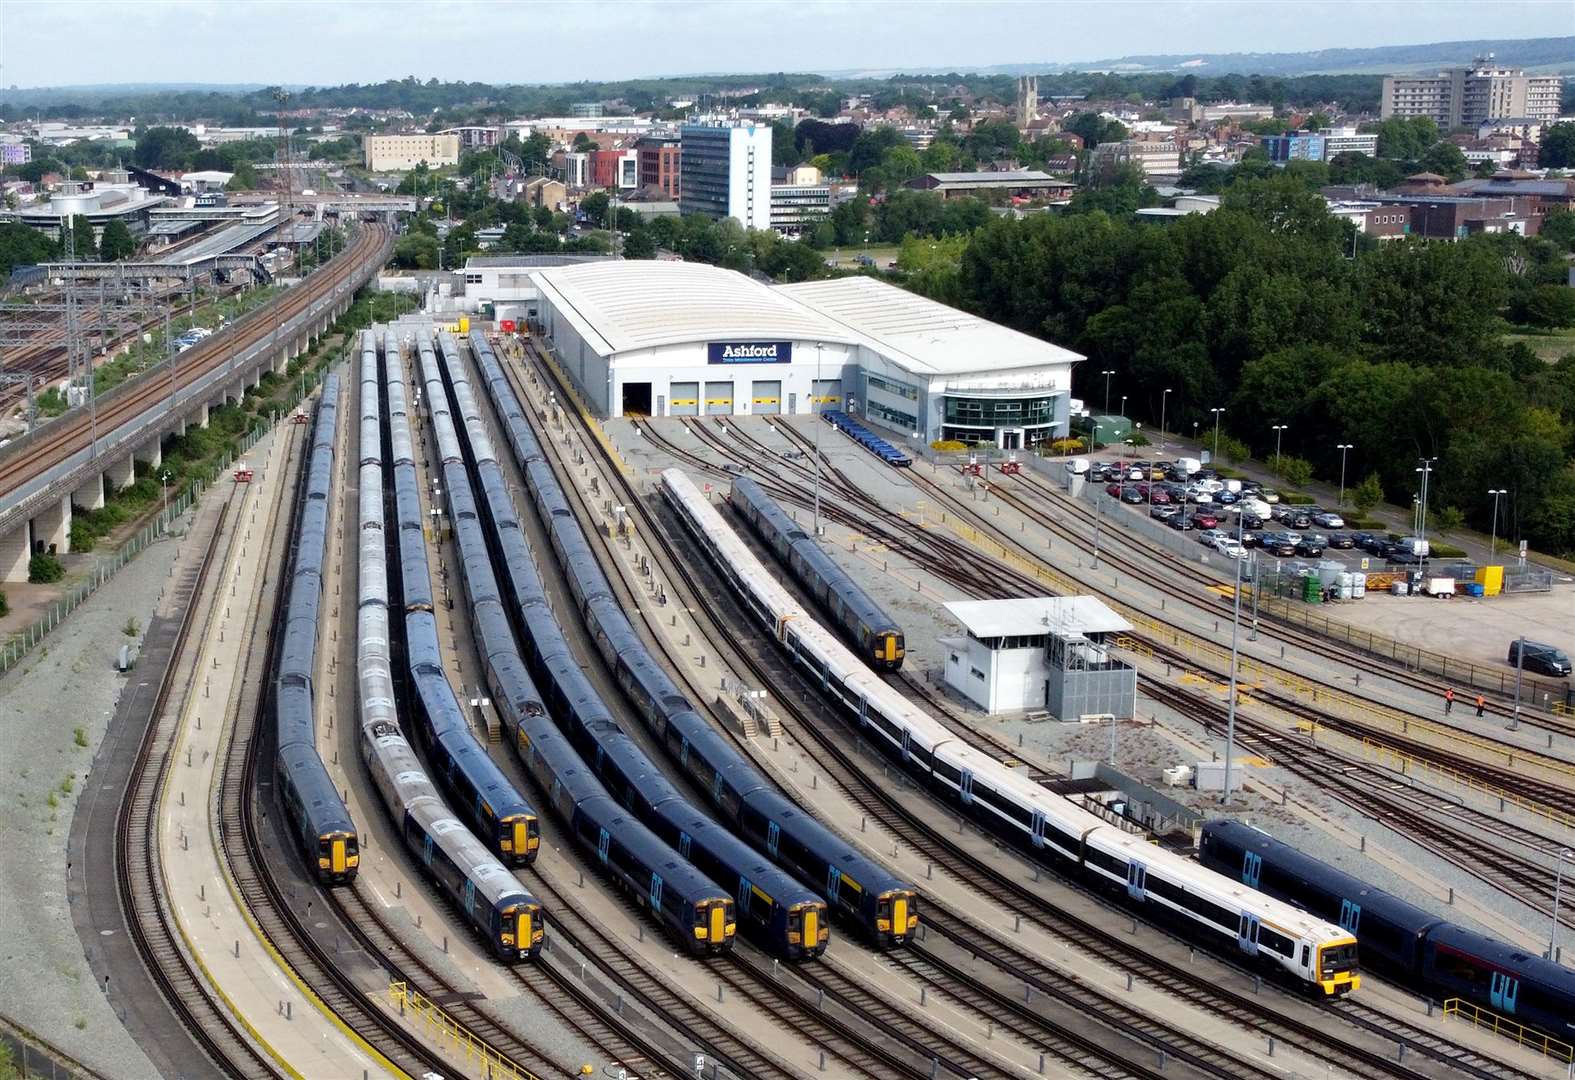 Southeastern trains sit in sidings in Ashford, Kent (Gareth Fuller/PA)